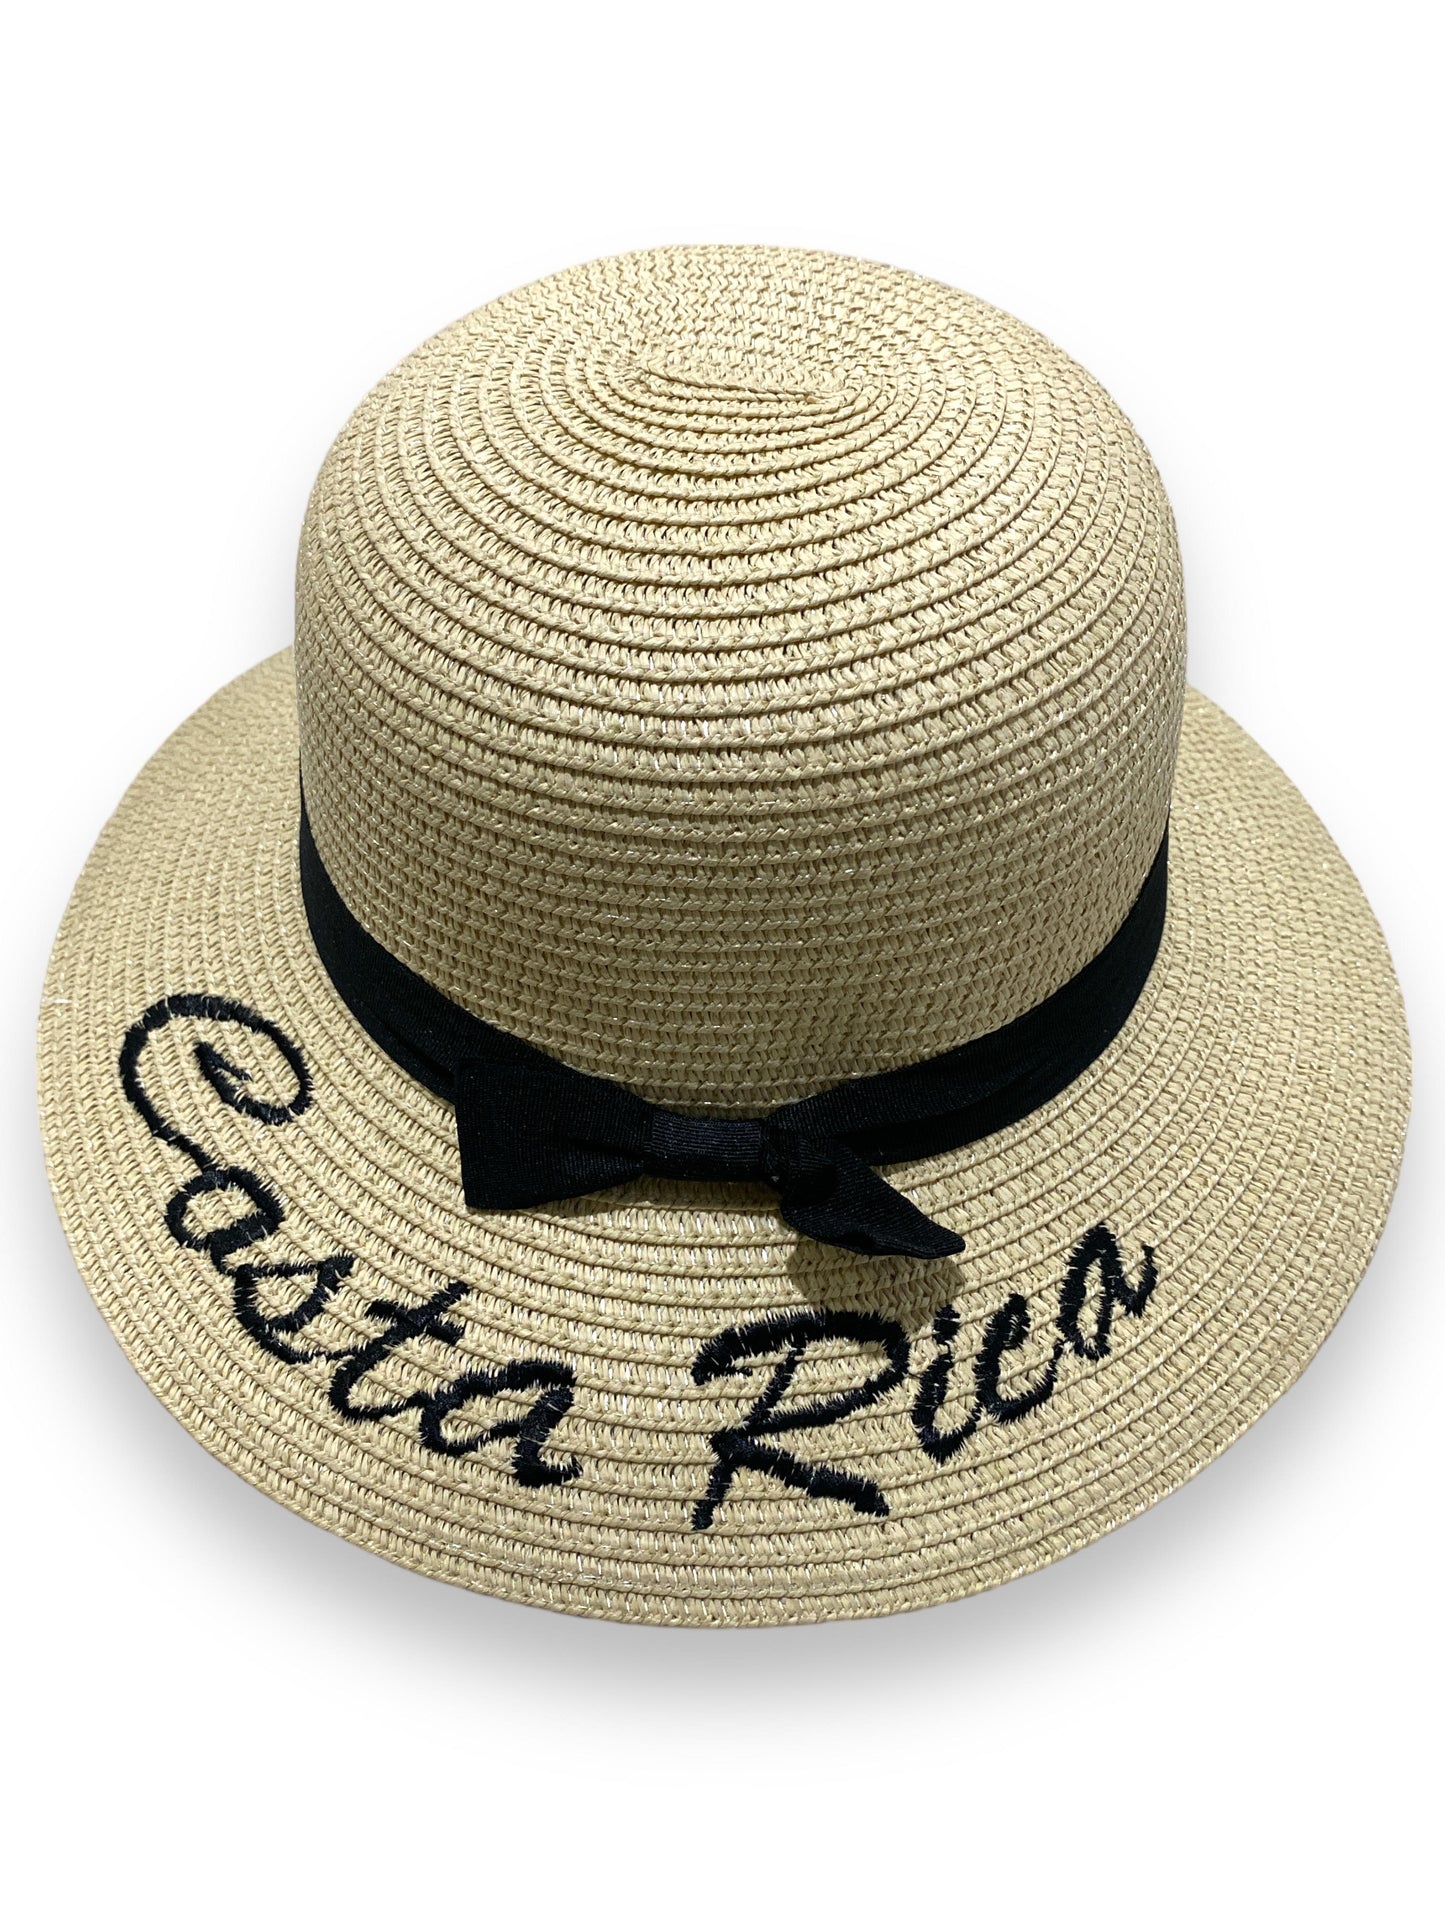 Sombrero de Dama Beige Costa Rica